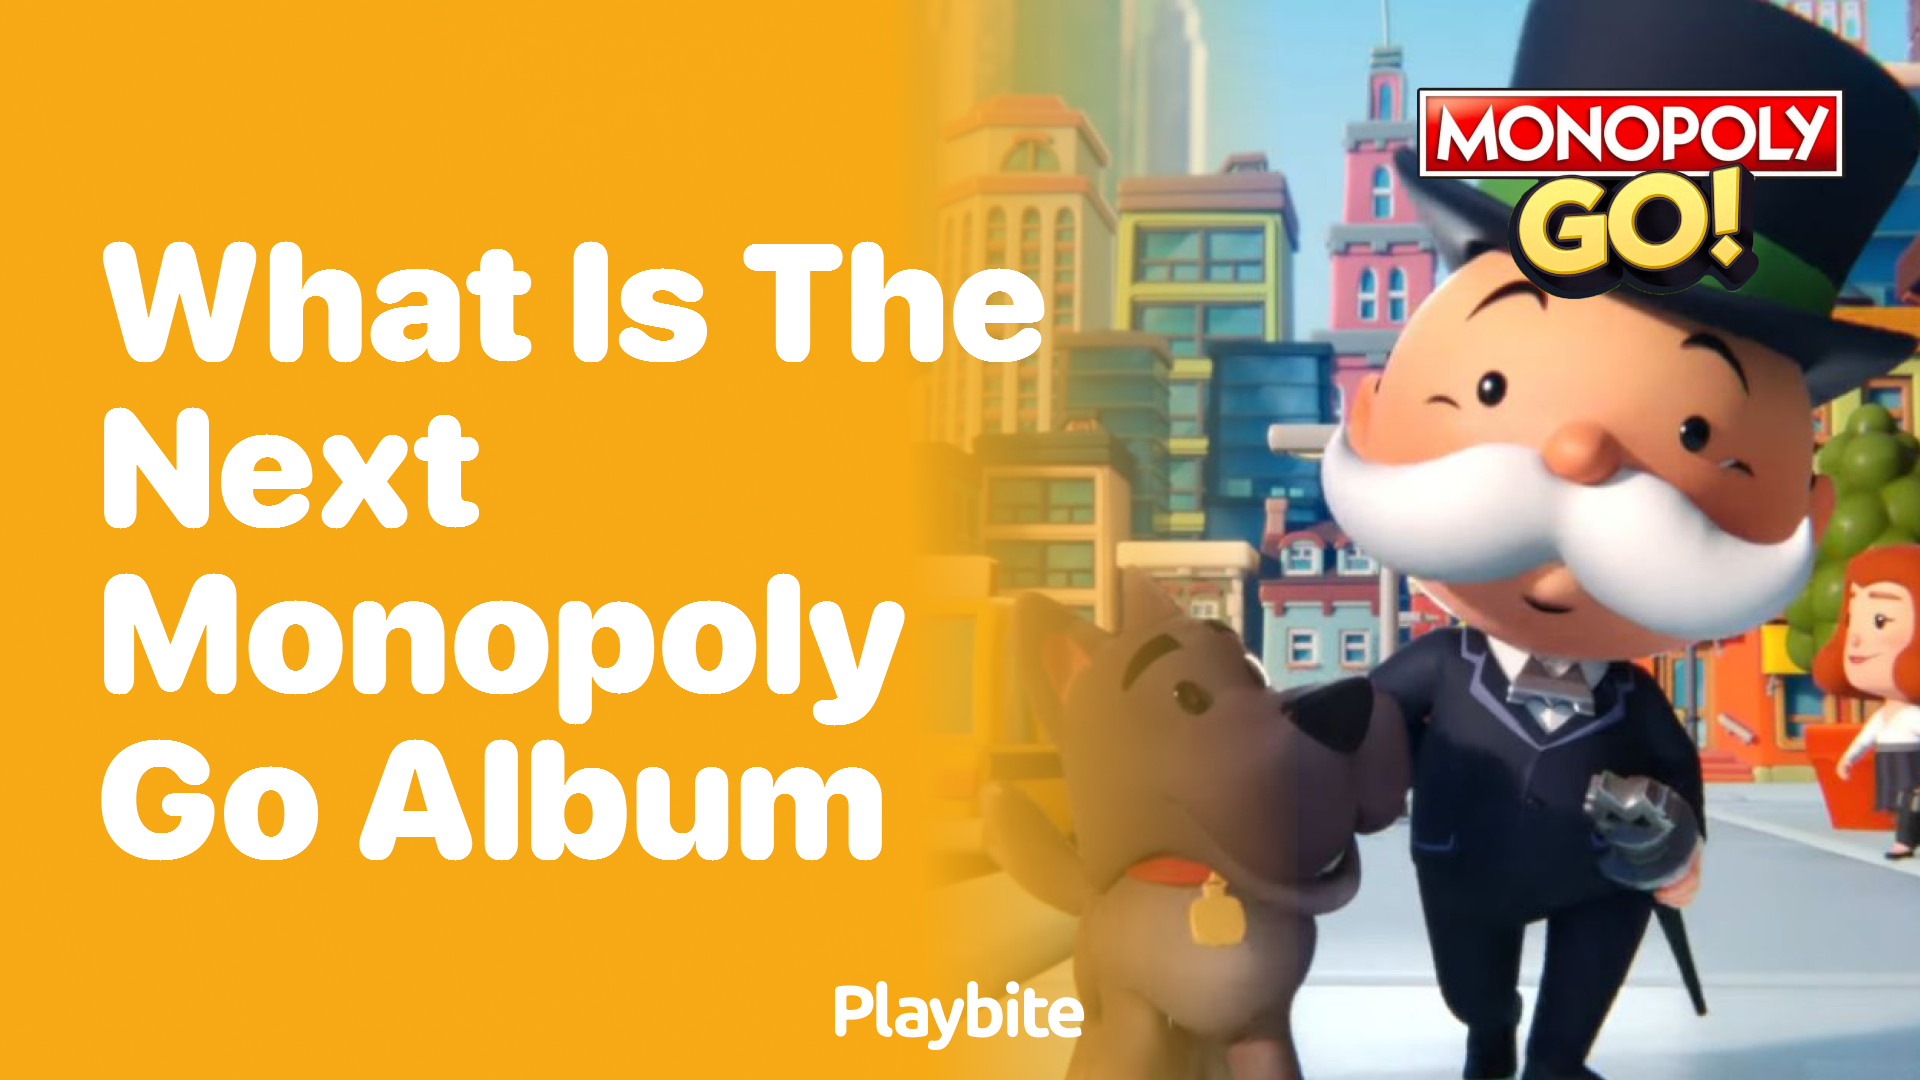 What Is the Next Monopoly Go Album?